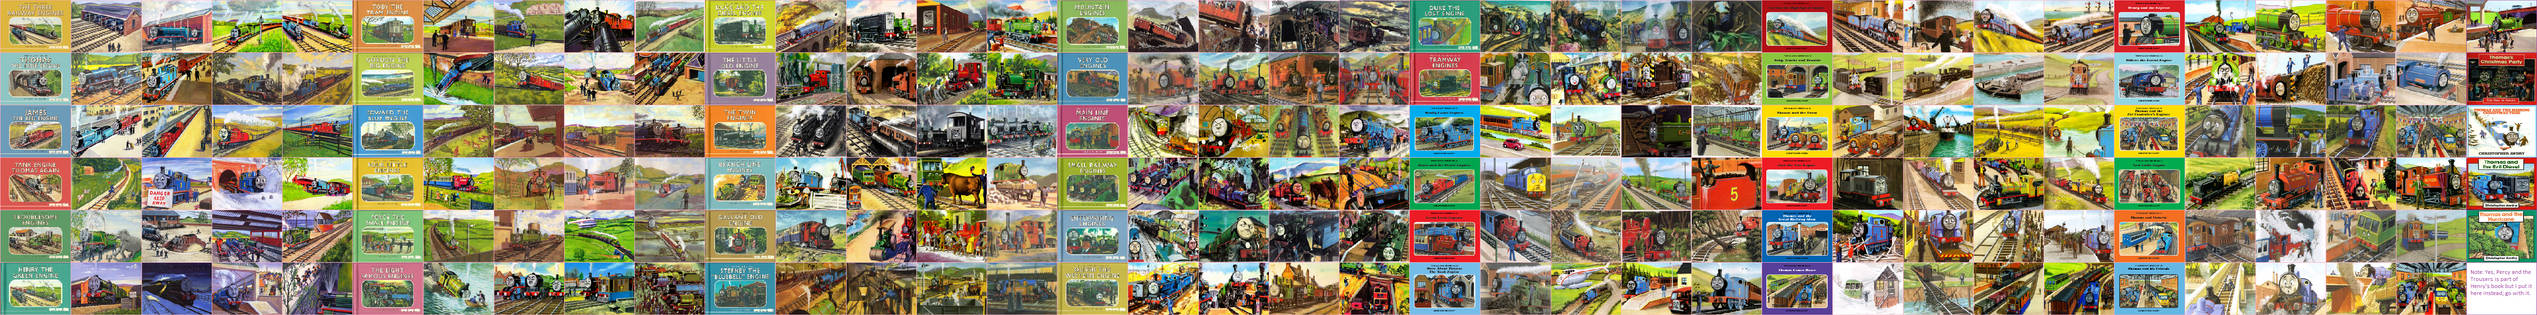 Every Railway Series story to date by TobyandMavisforever on DeviantArt